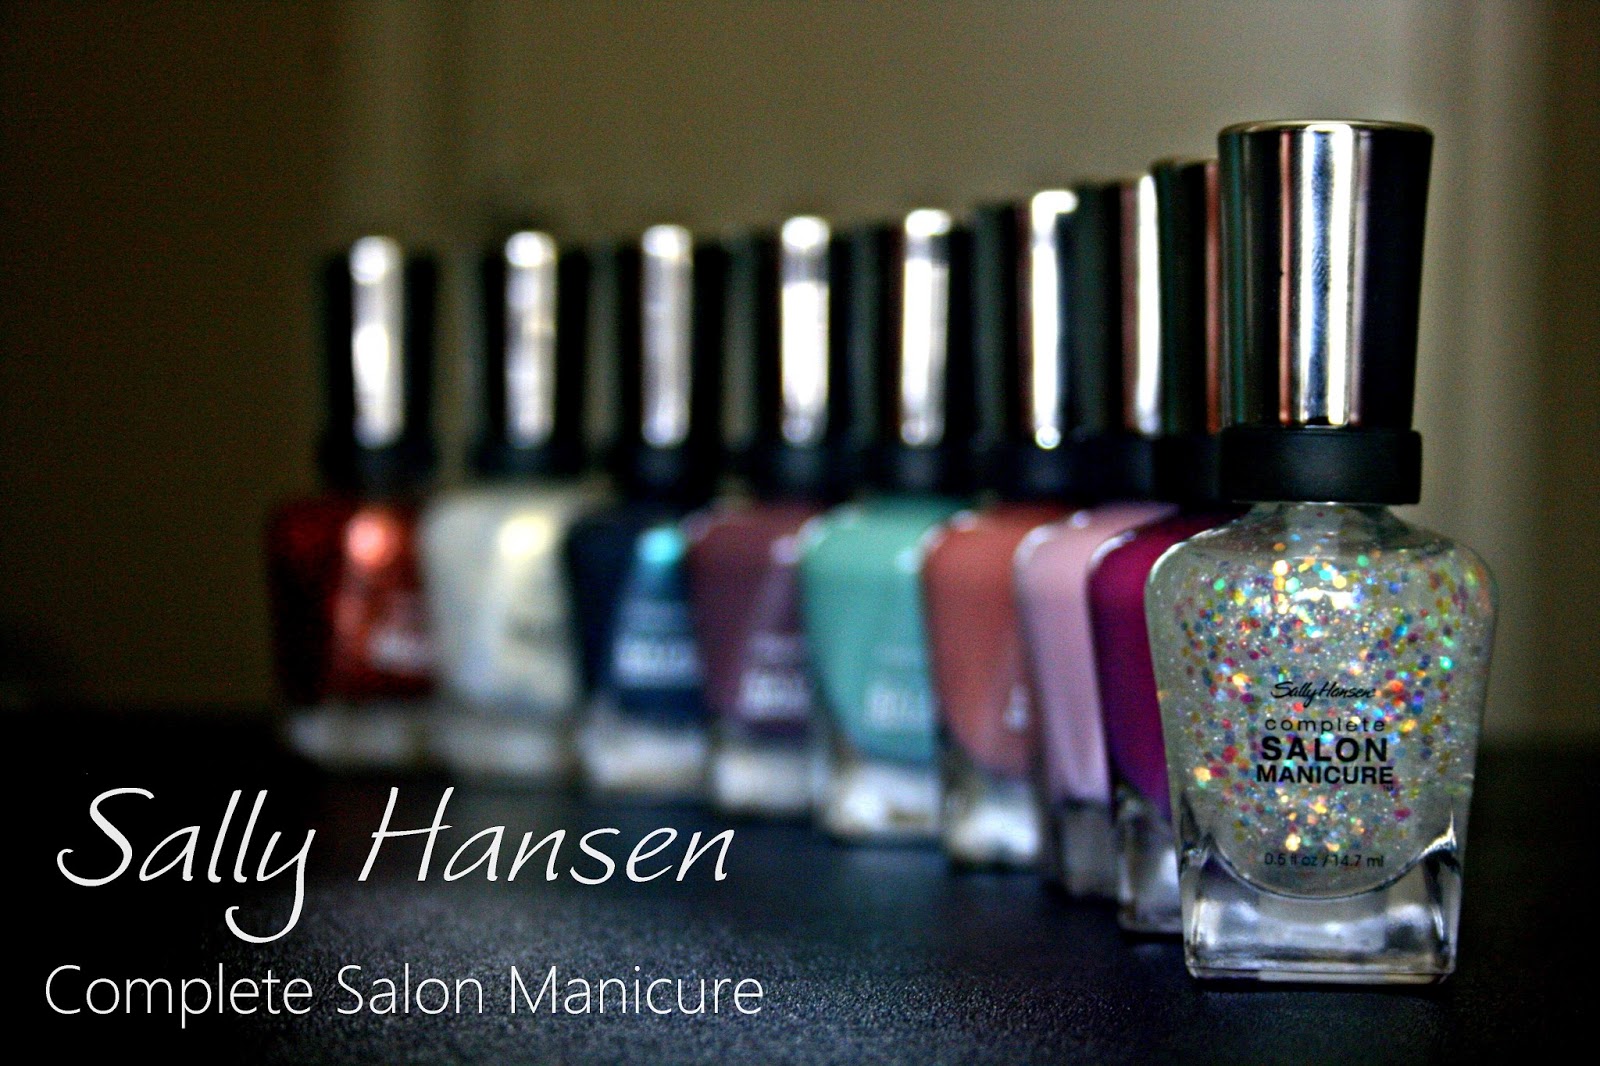 Sally Hansen Complete Salon Manicure Nail Polish - wide 2